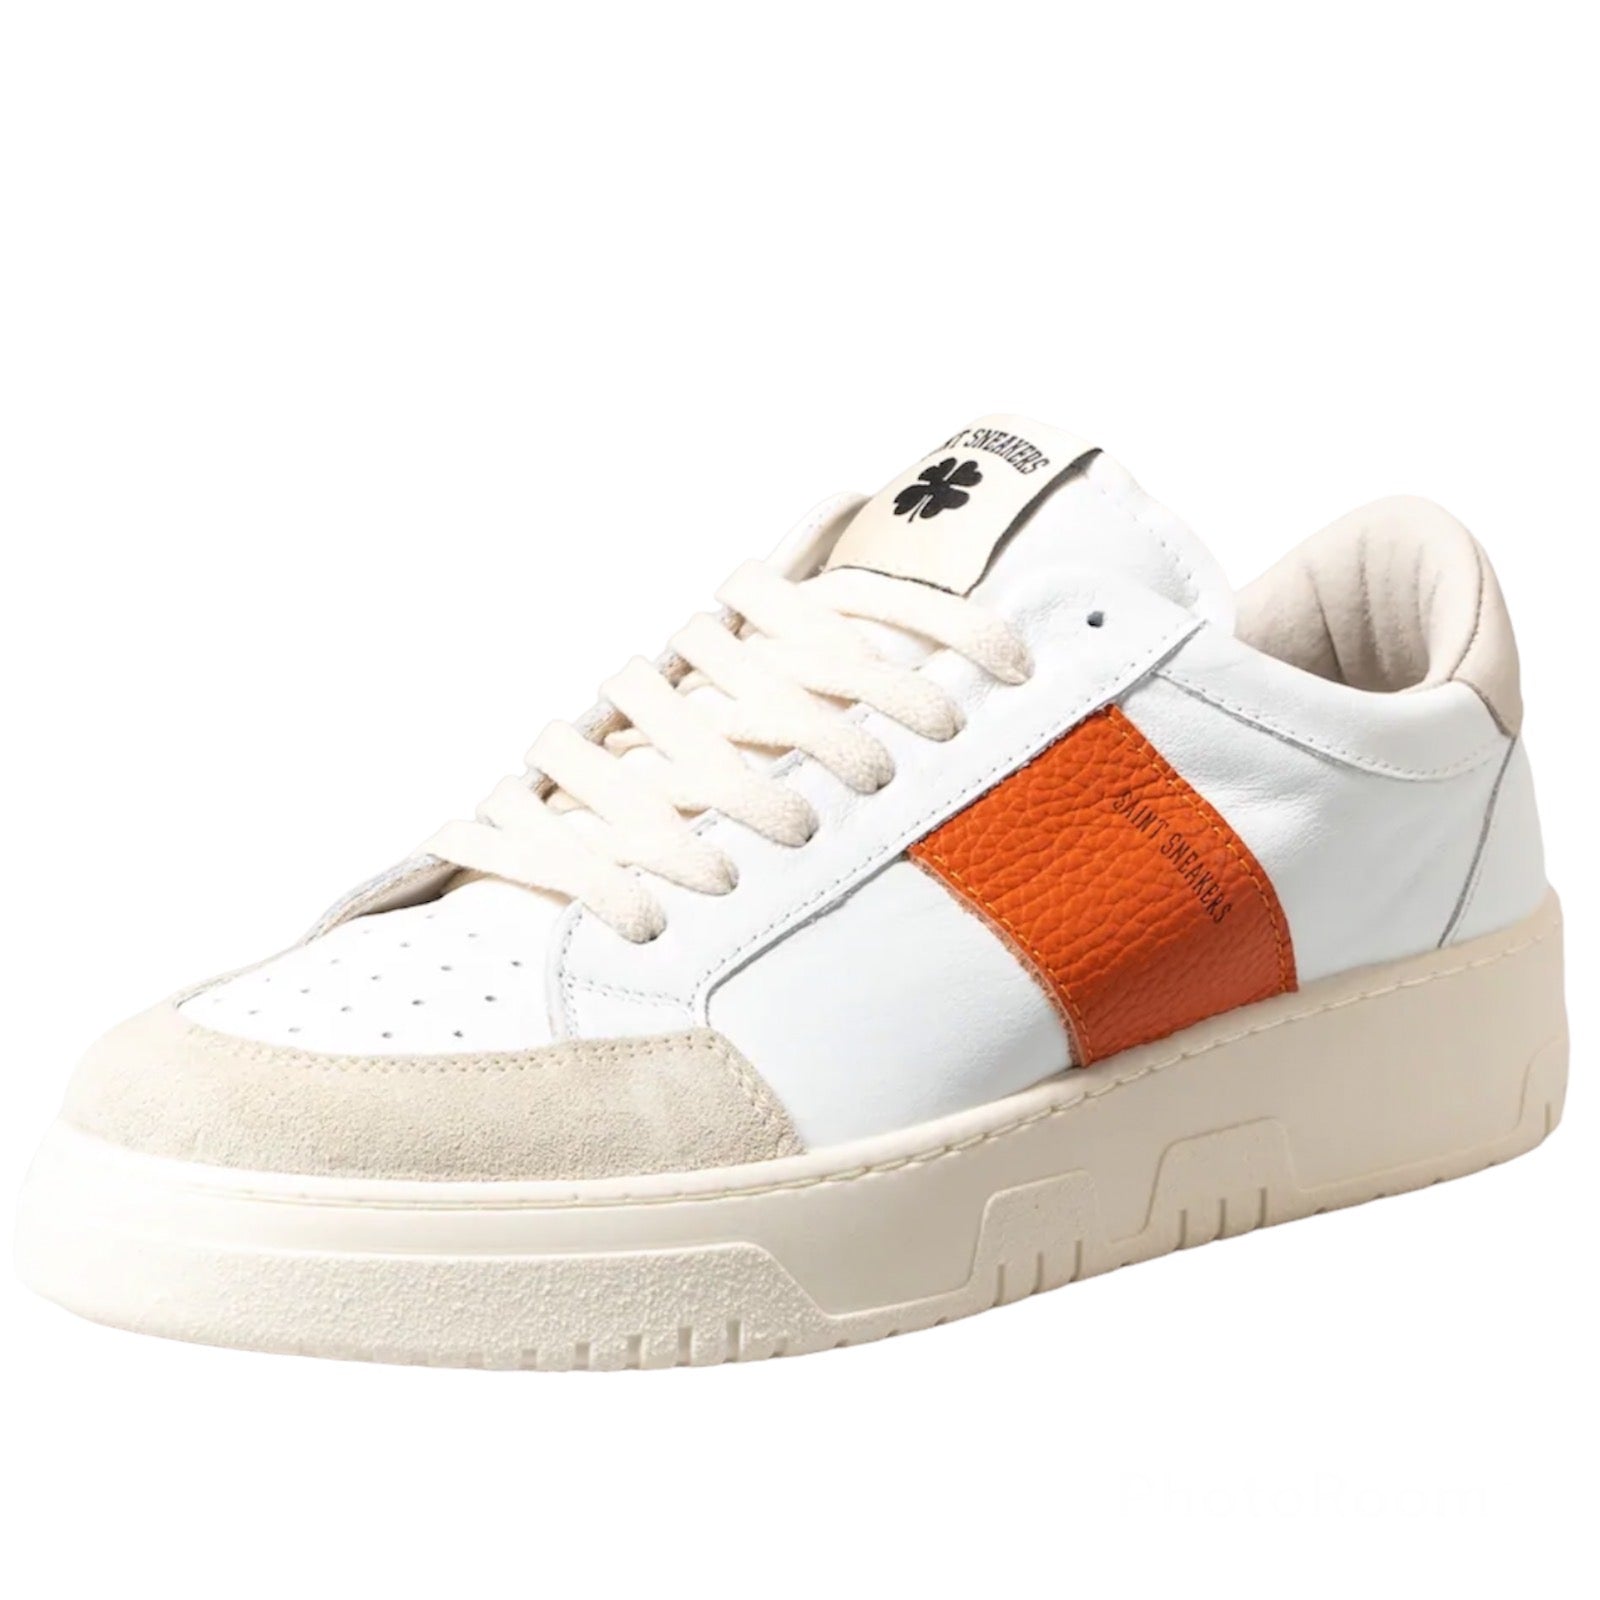 Sneakers SAINT SNEAKERS Sail
Bianco/arancio